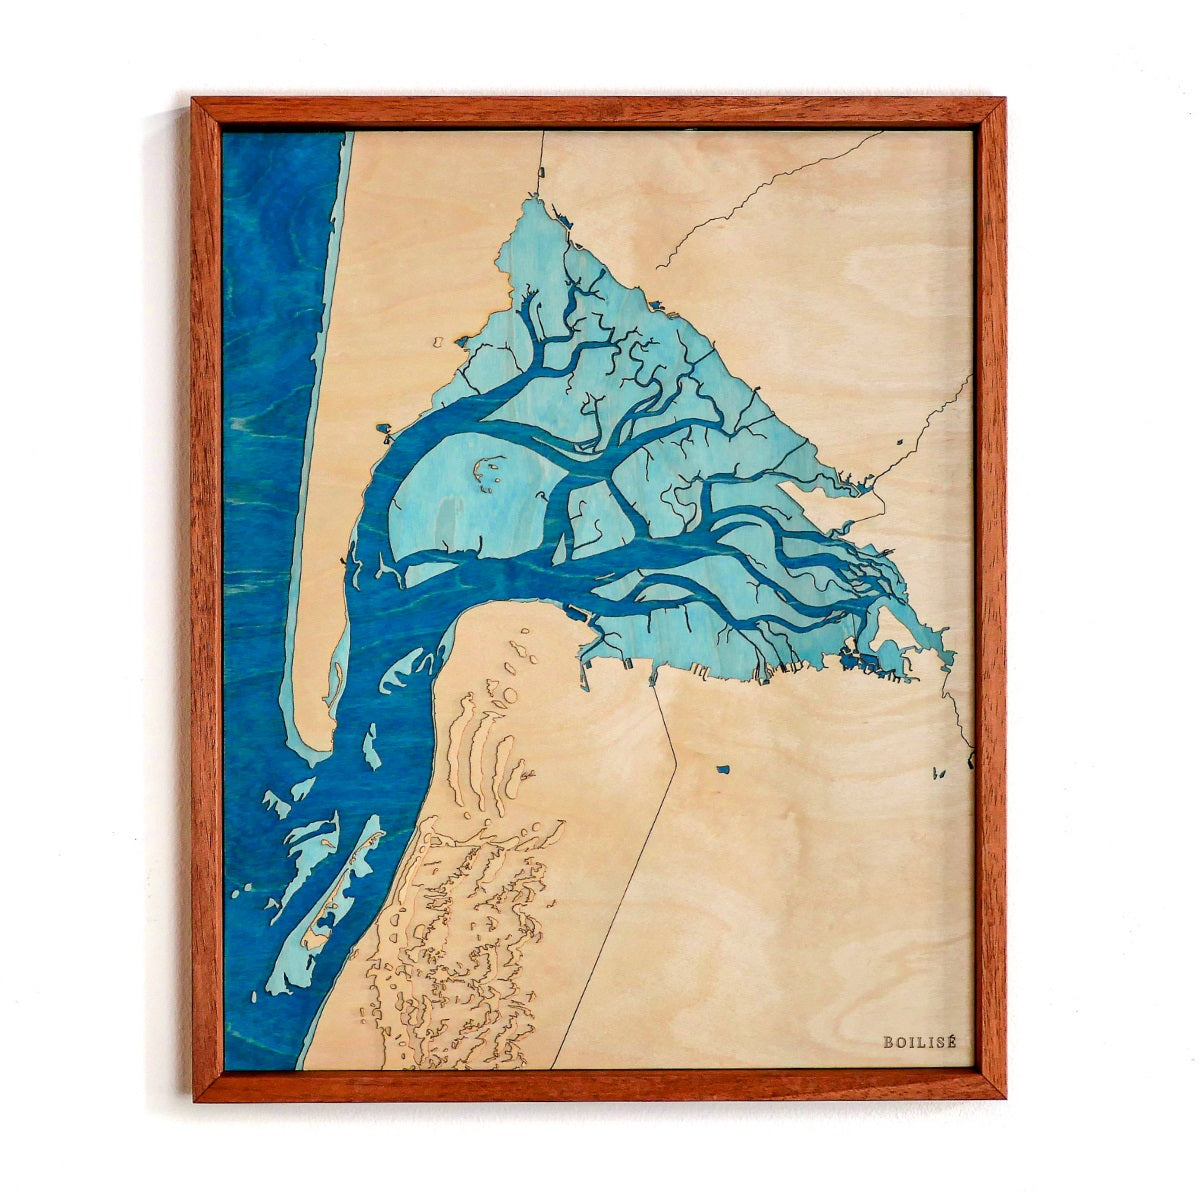 Tableau du bassin d'Arcachon, cadre standard brun et océan bleu marine